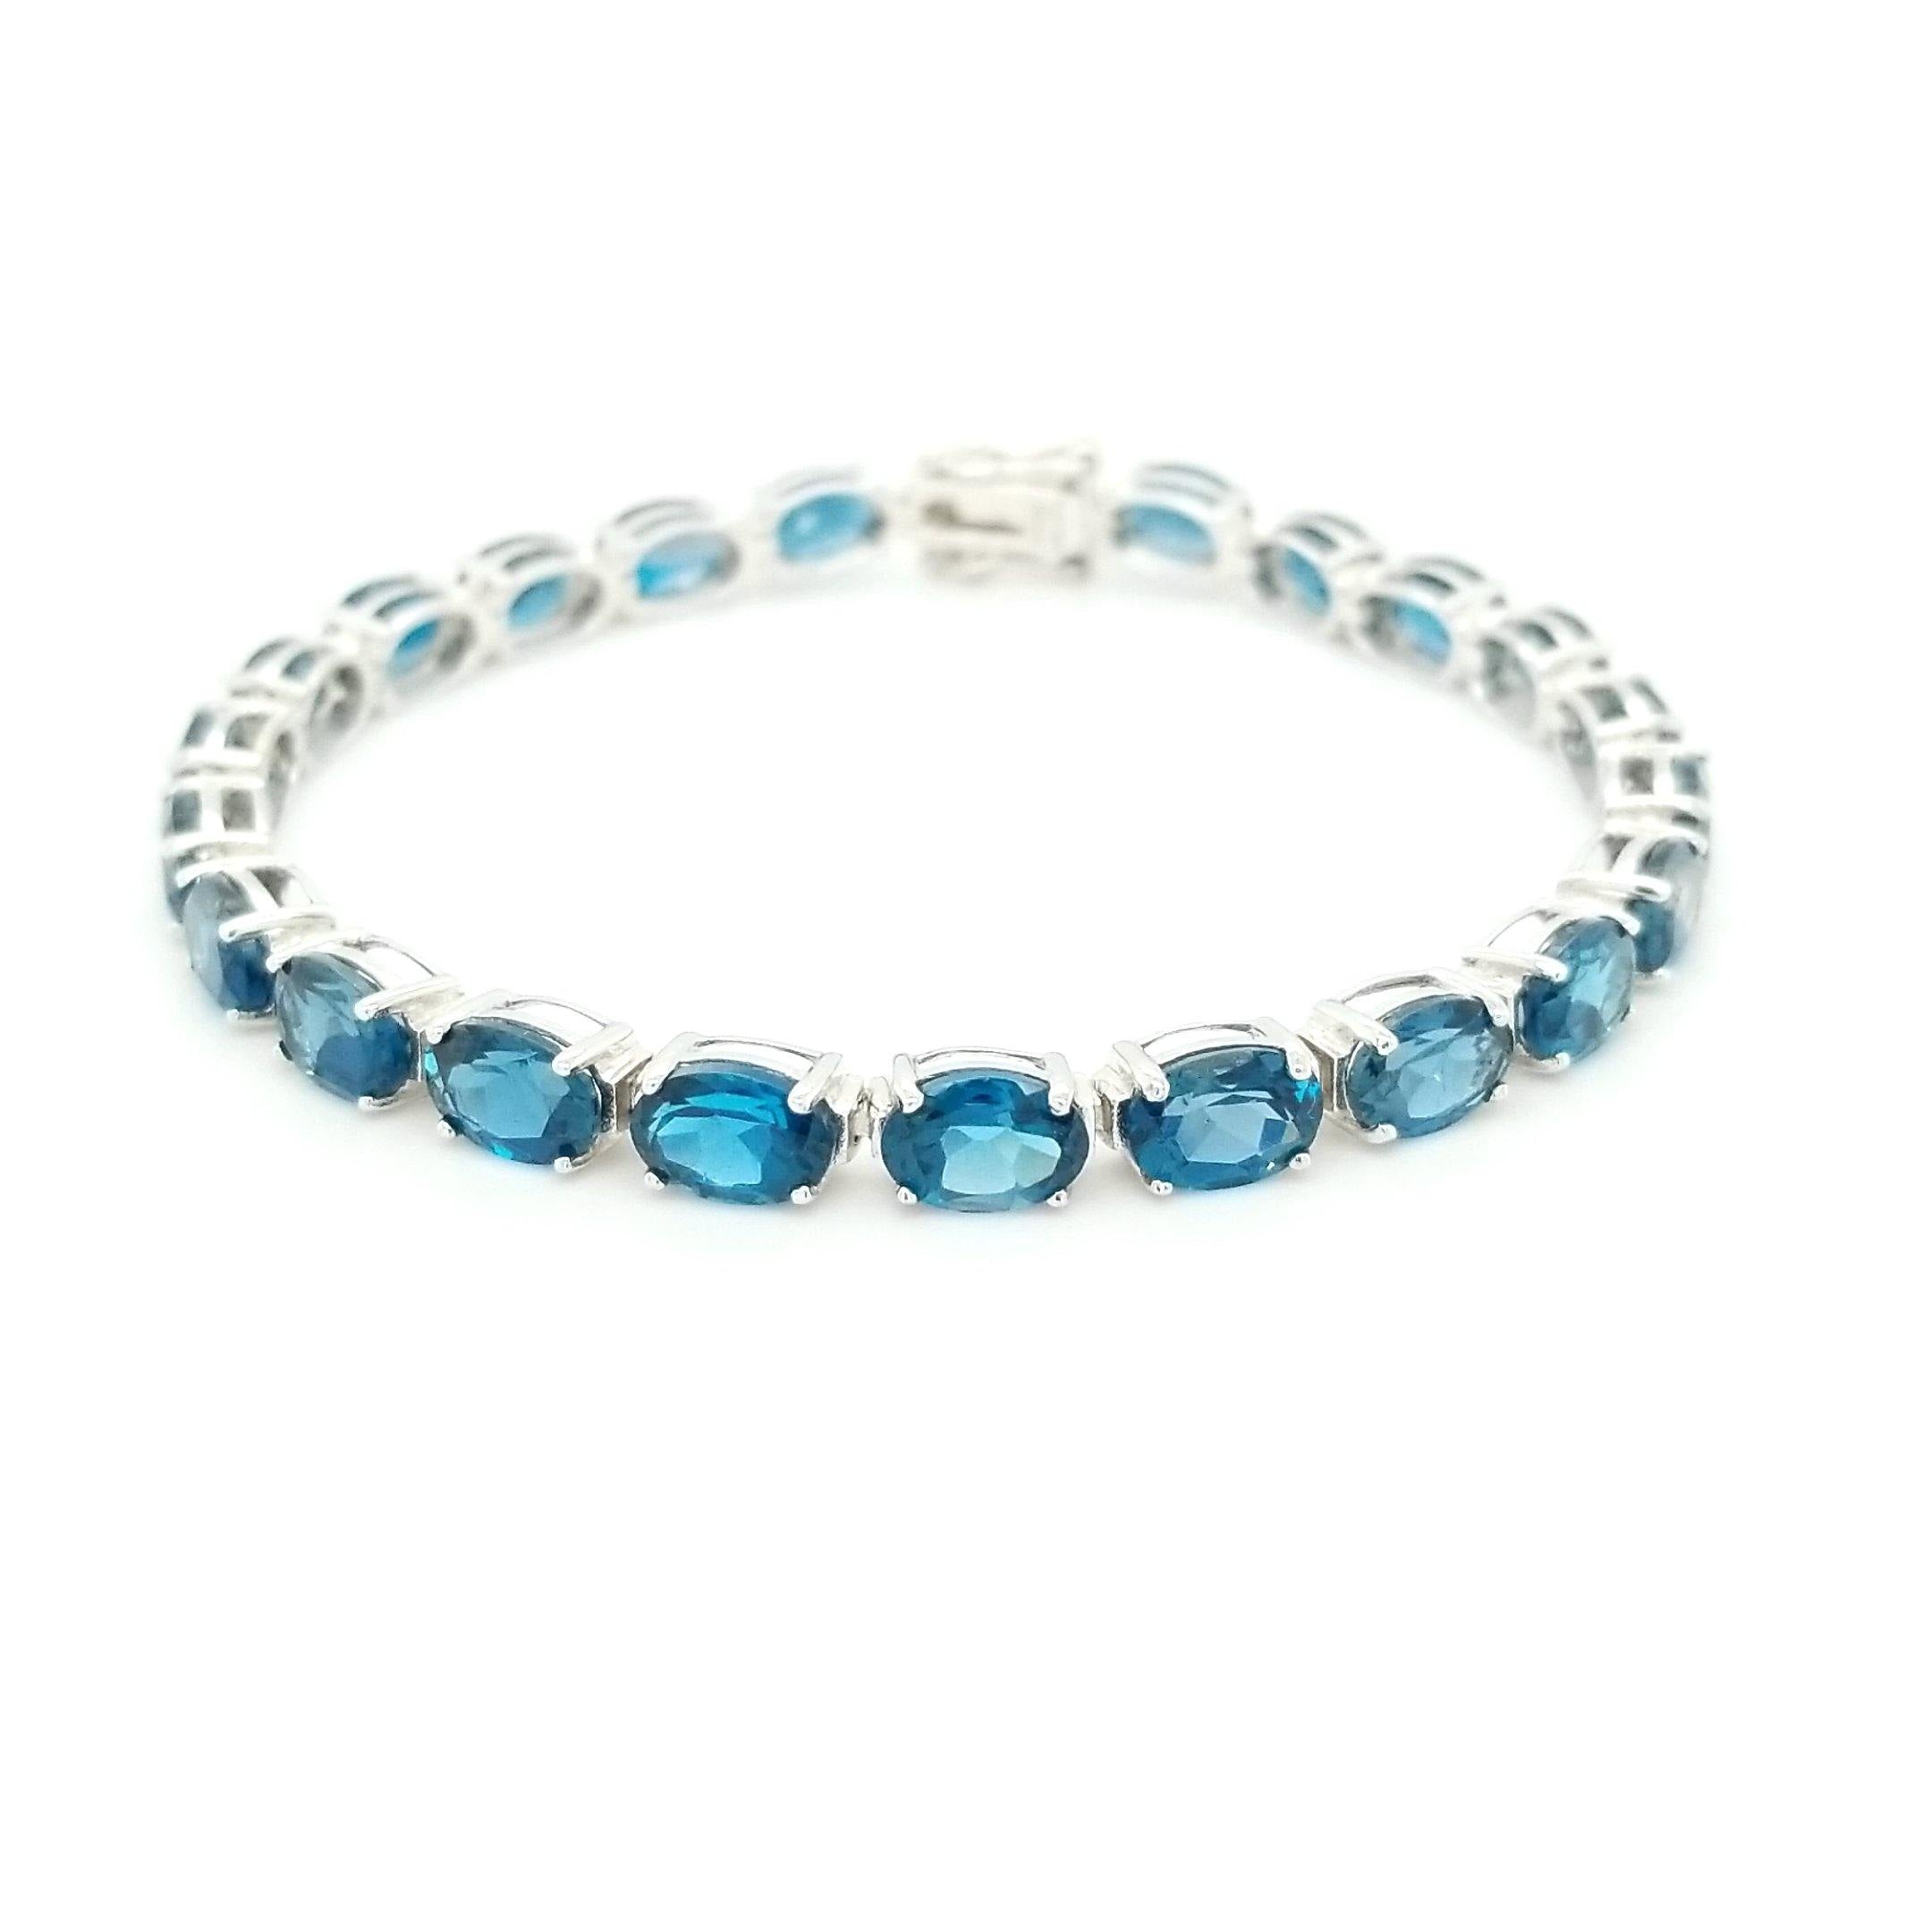 “The Londoner” - London Blue Topaz Sterling Silver Bracelet - The Rutile Ltd